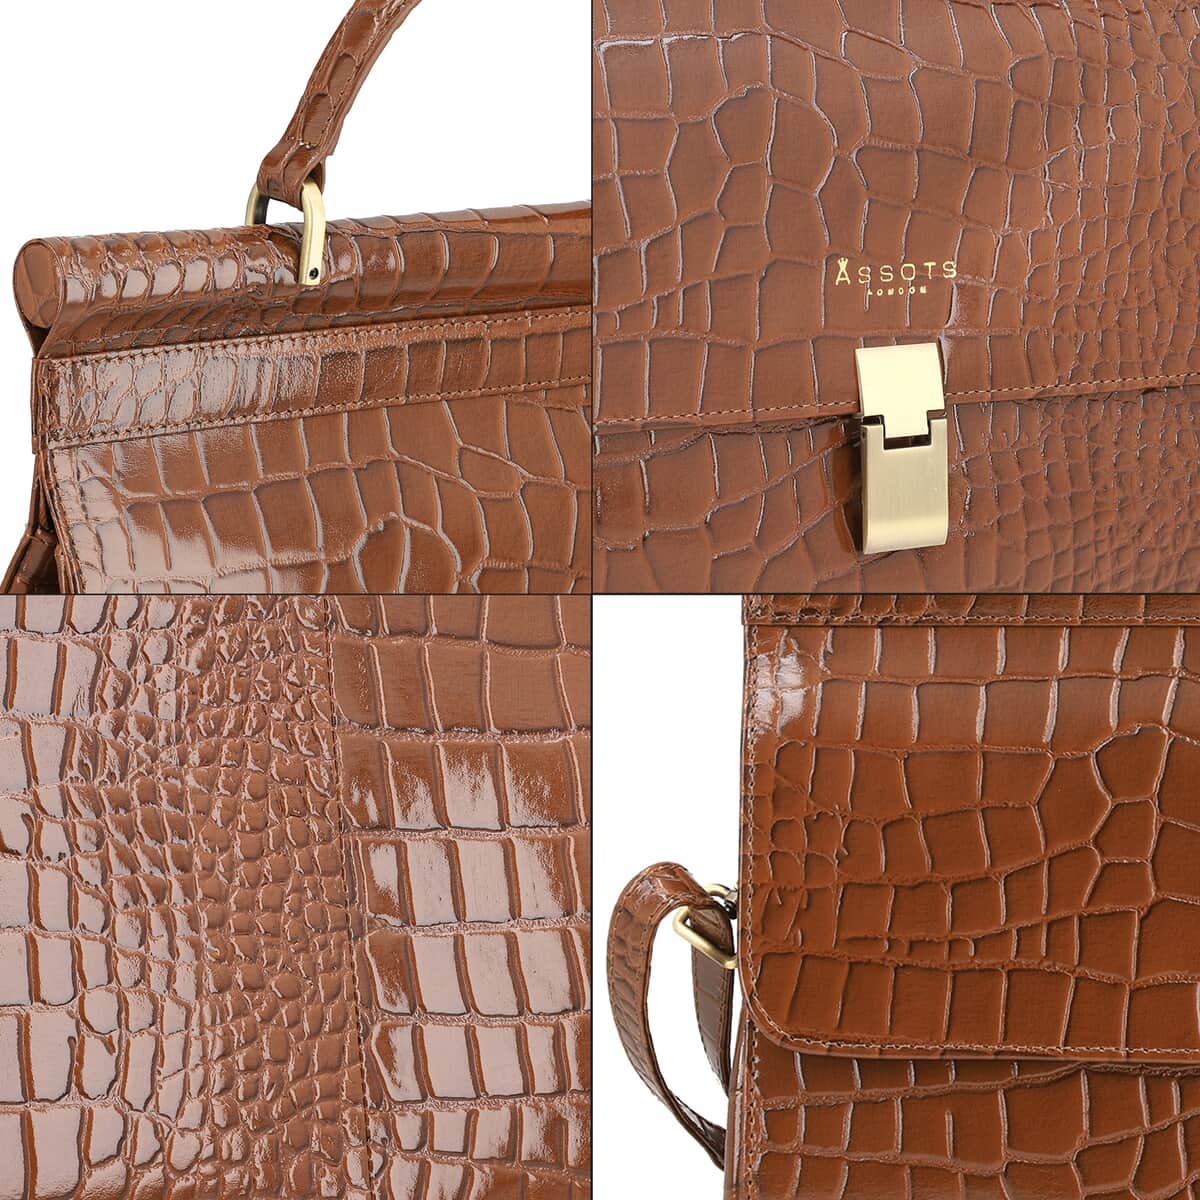 Assots London Tan Genuine Leather Croco Embossed Satchel Bag, Ladies Purse Handbag With Adjustable & Detachable Shoulder Strap And Button Closure (11.61X3.54X9.64) image number 5